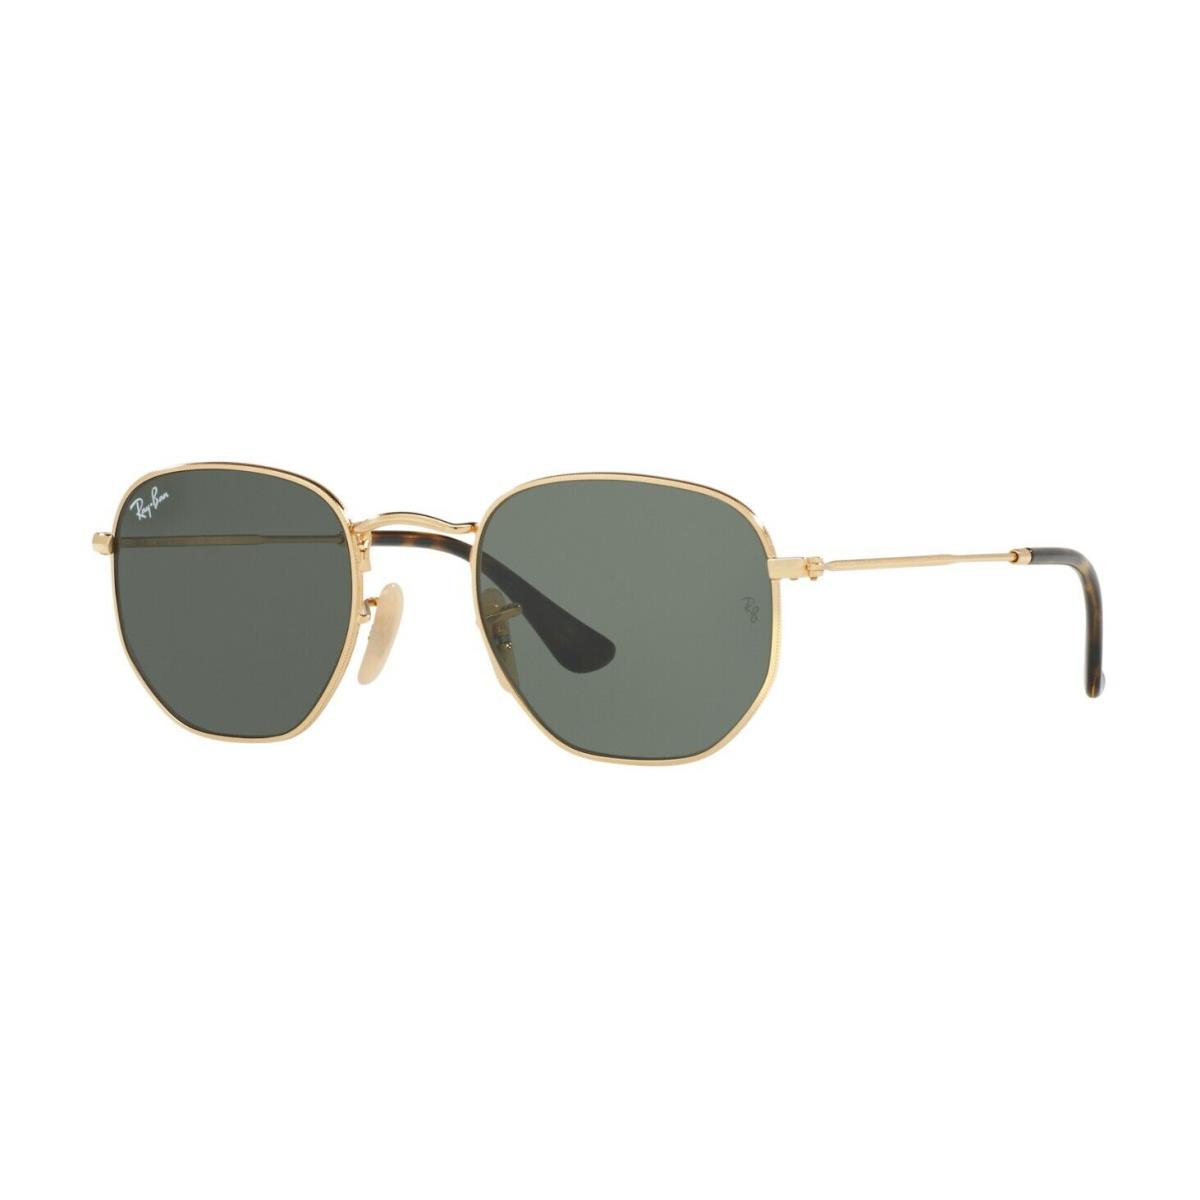 Ray-ban Hexagonal Metal RB 3548N Gold/G-15 Classic Green 001 Sunglasses